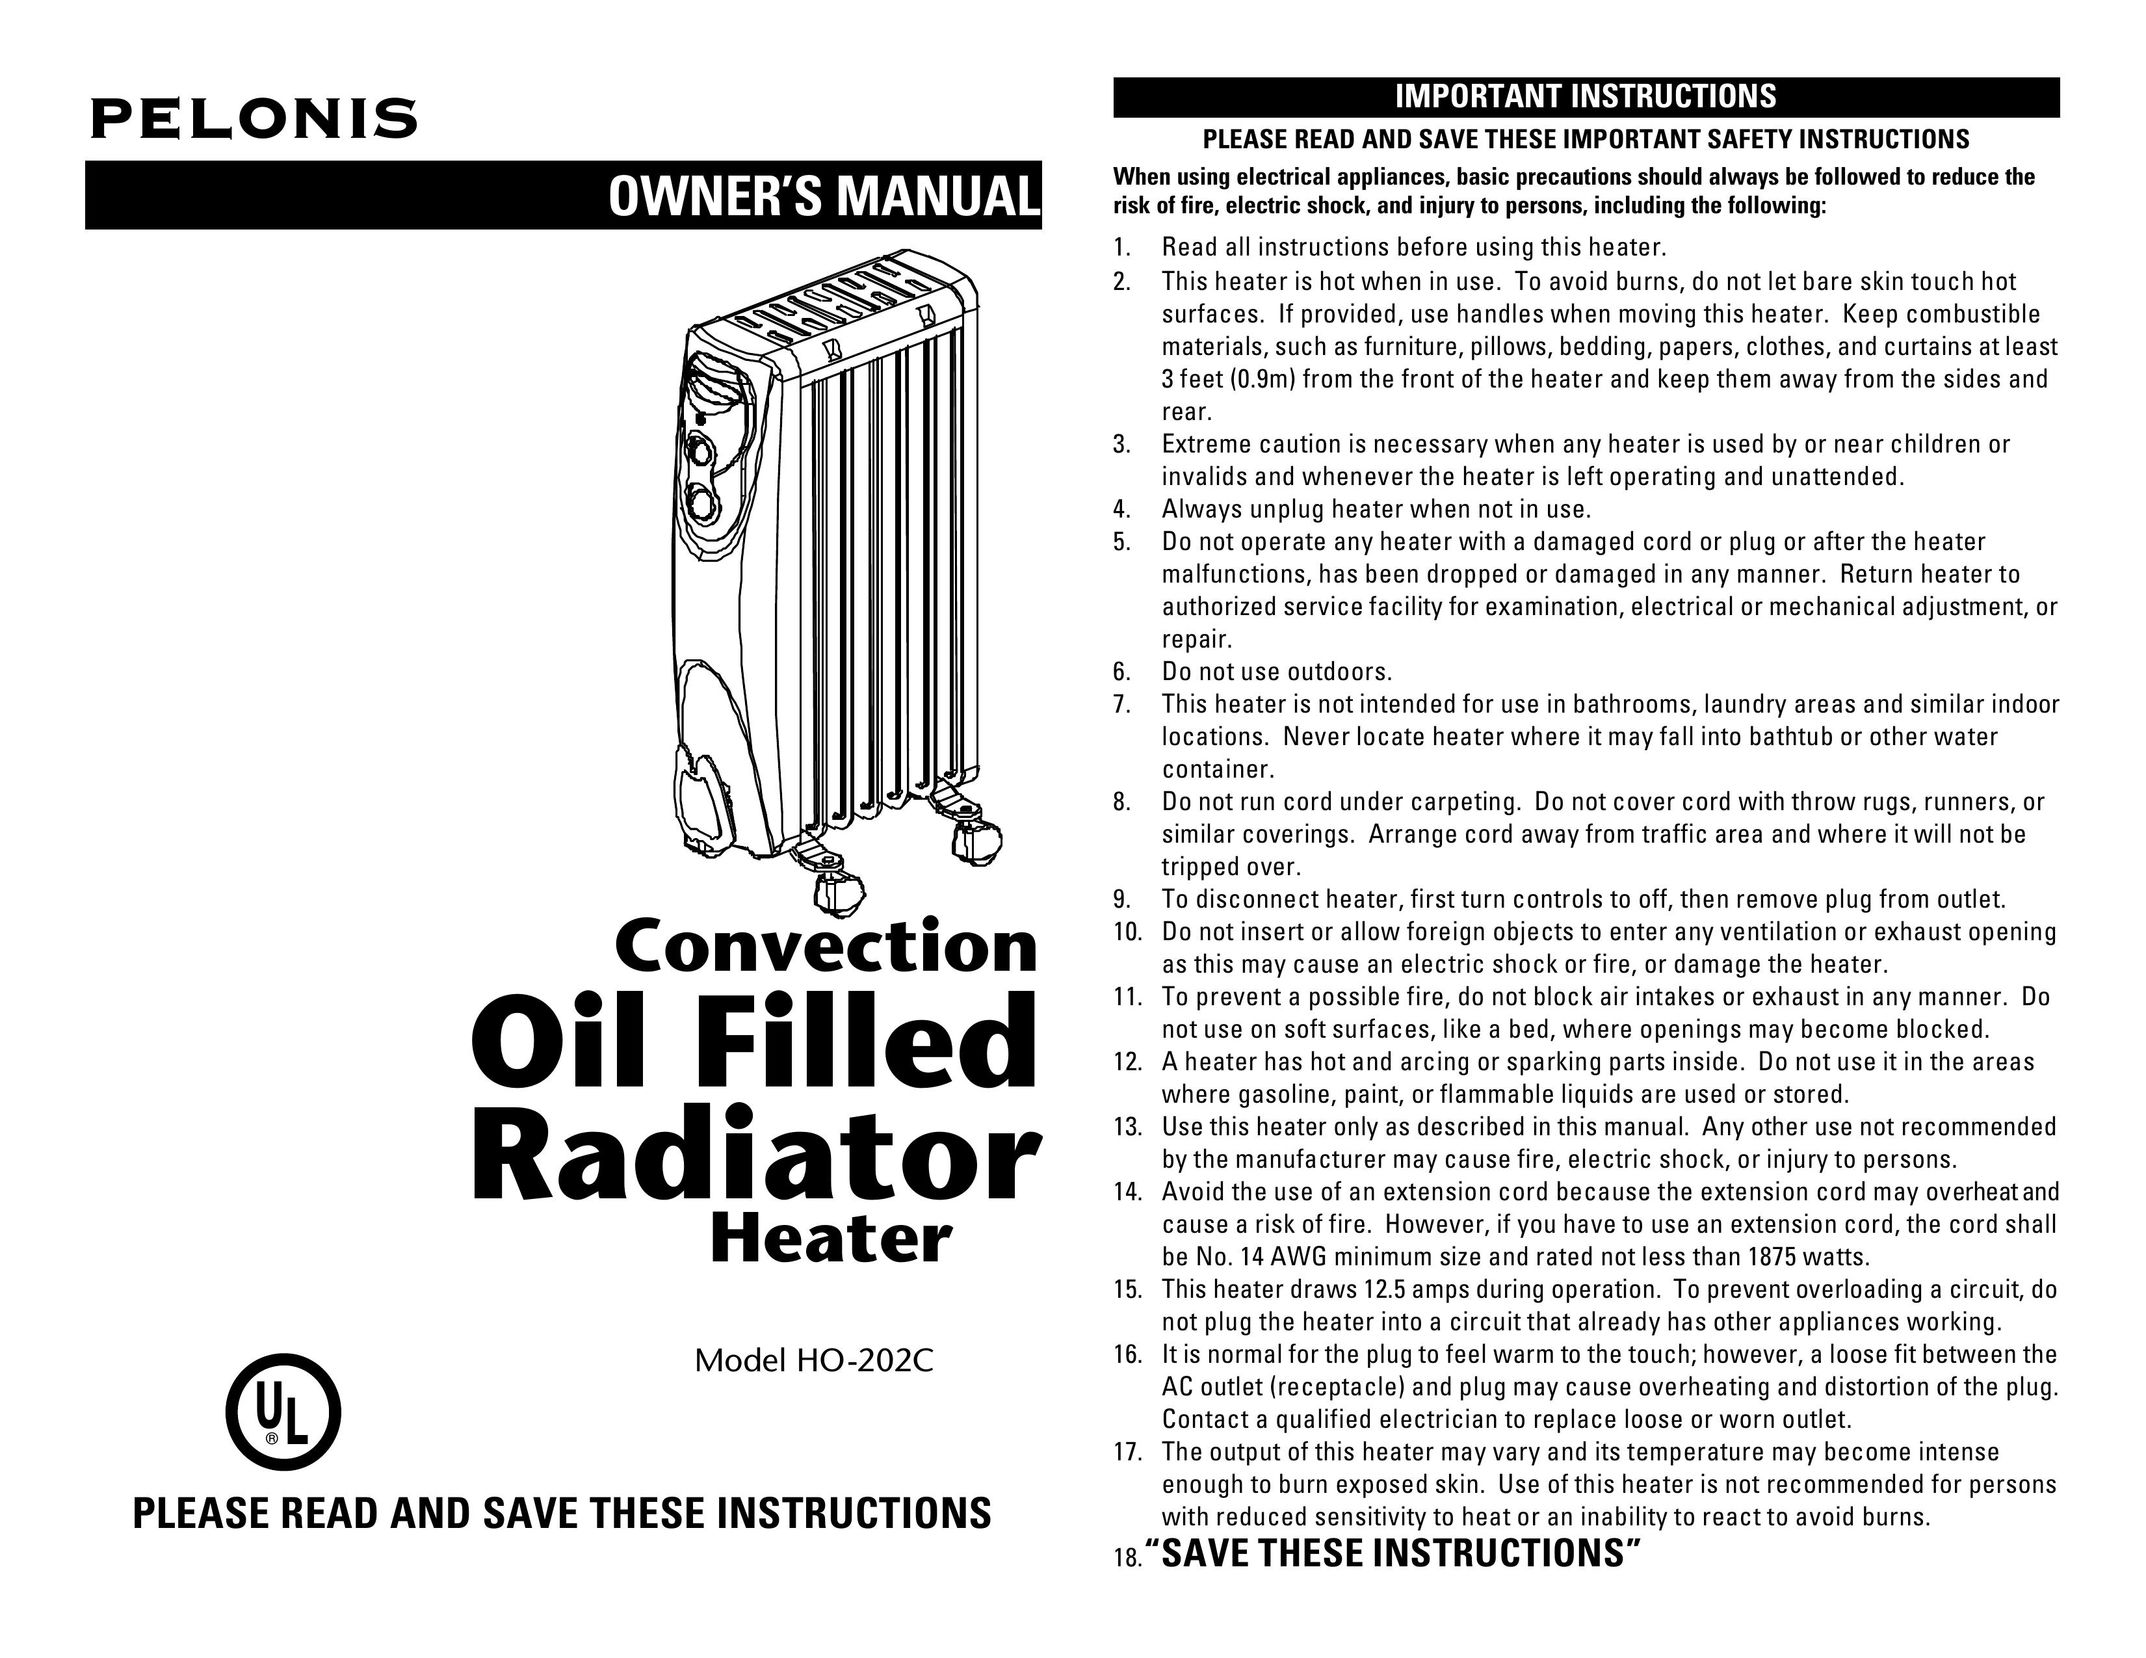 Pelonis HO-202C Electric Heater User Manual